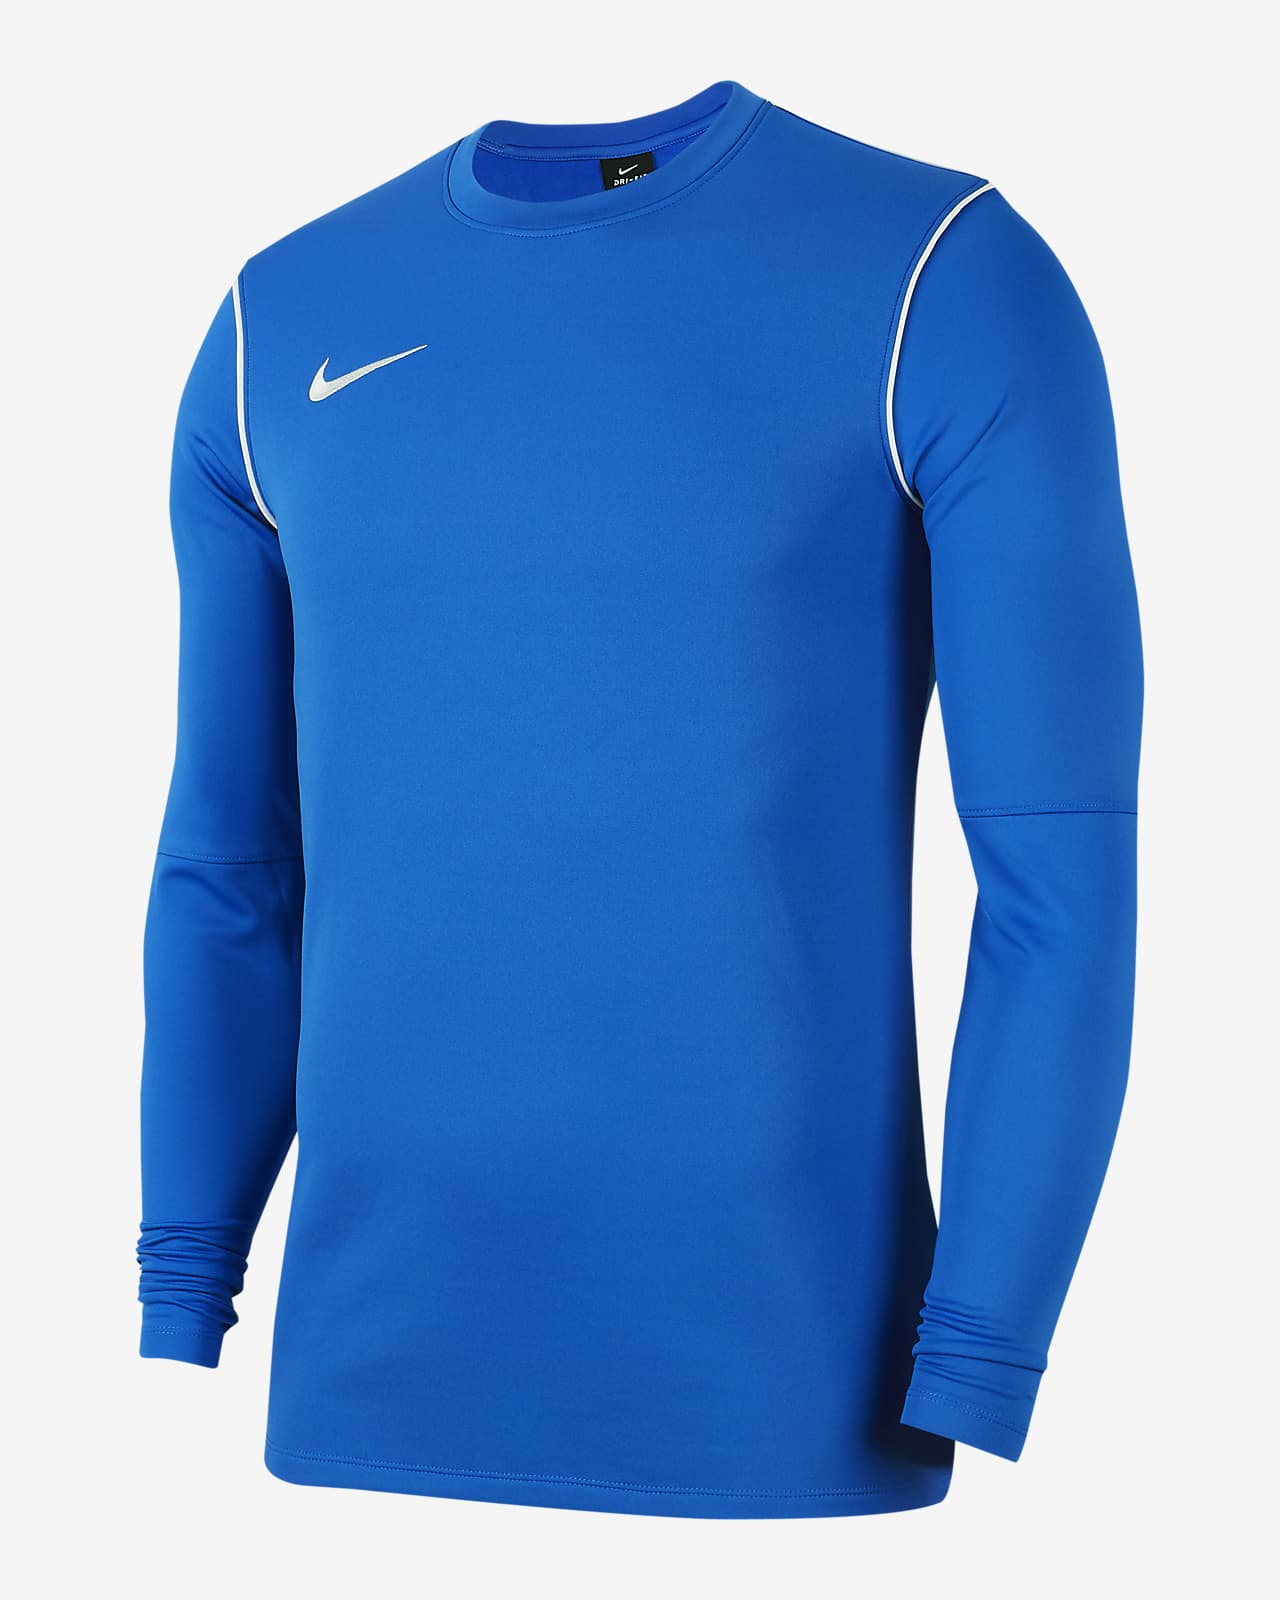 Voordracht nevel binding Nike Dri-FIT Men's Long-Sleeve Soccer Top. Nike JP